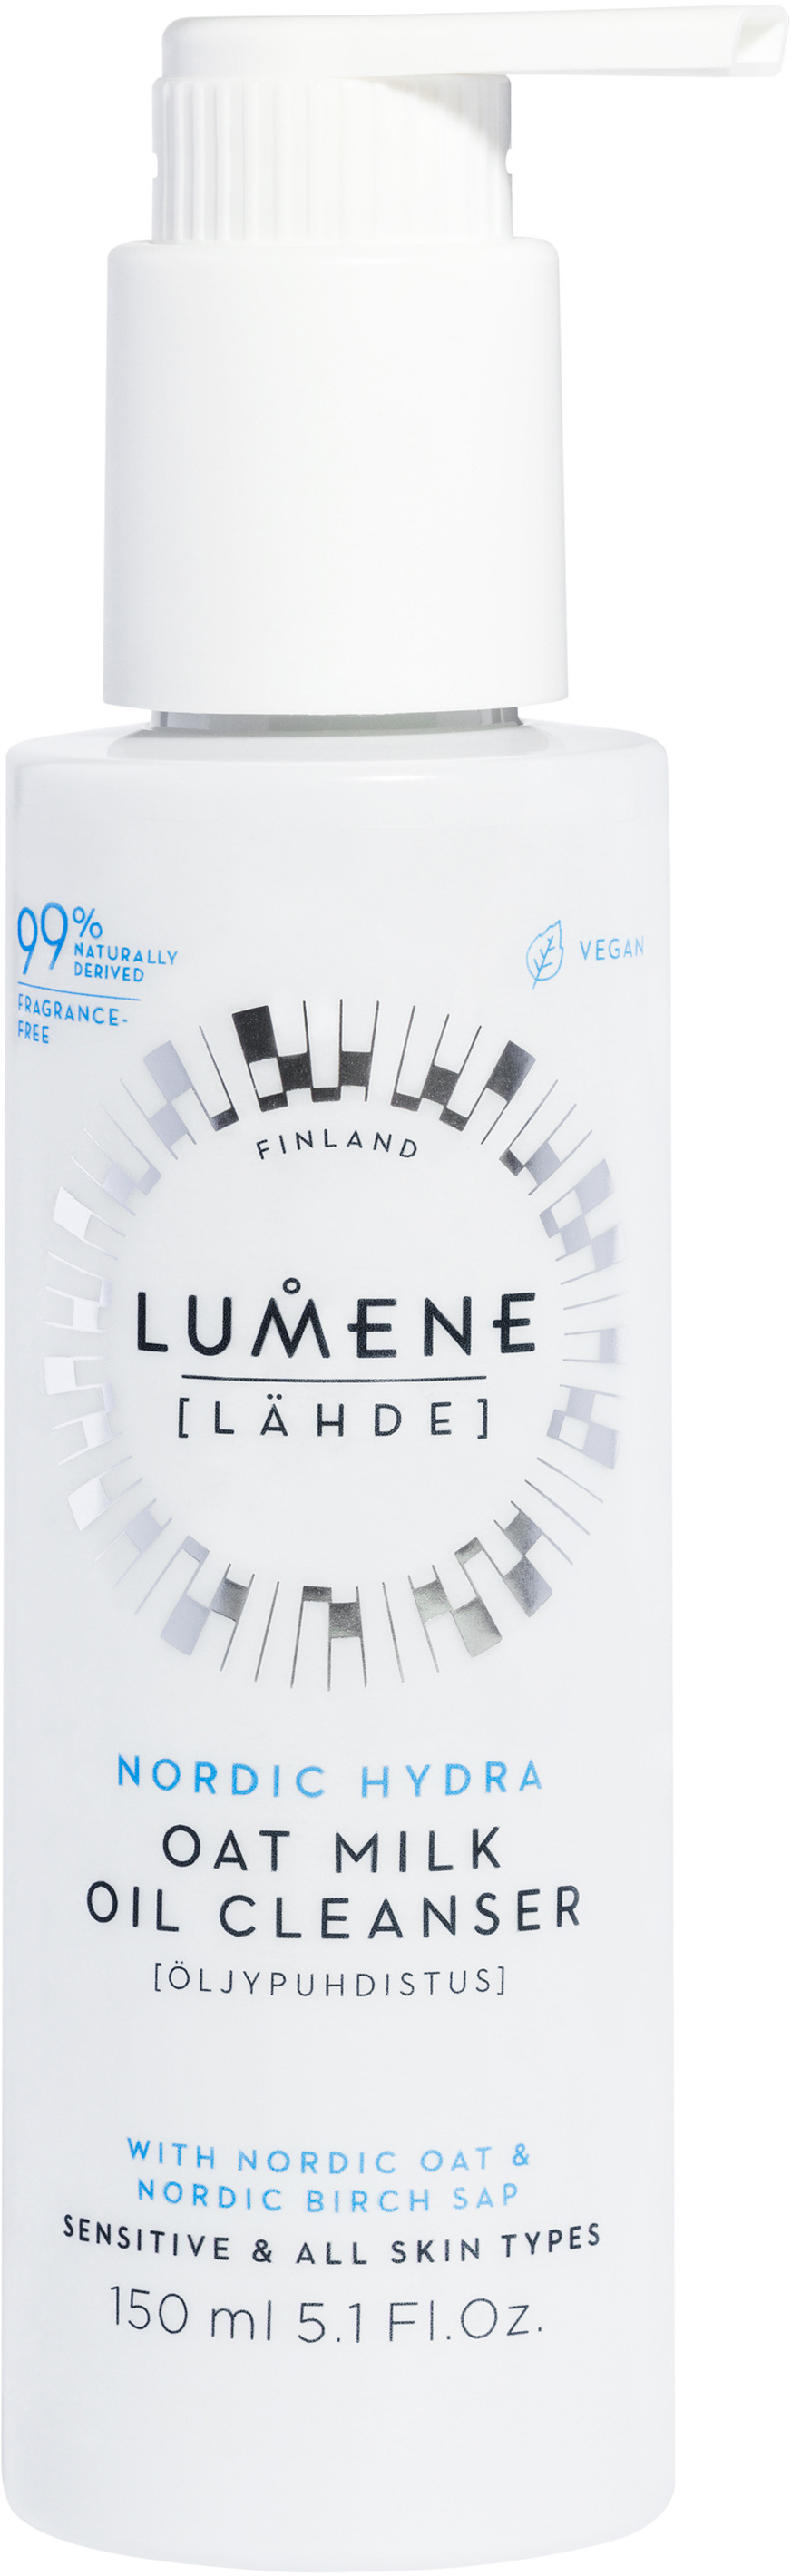 Lumene Nordic Hydra Oat Milk Oil Cleanser 150 ml